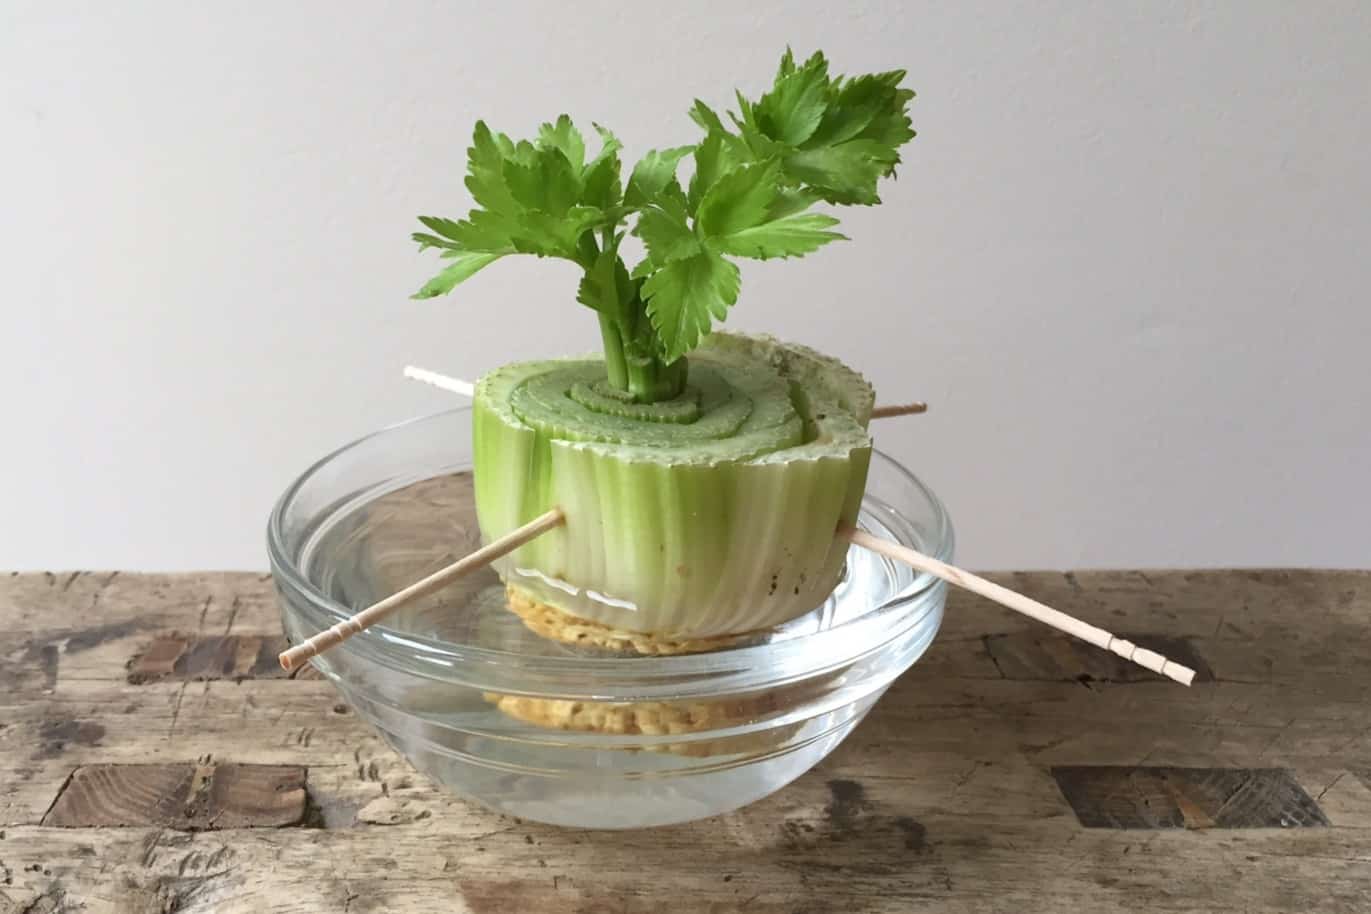 celery regrowing in water photo credit to Vanessa Greaves